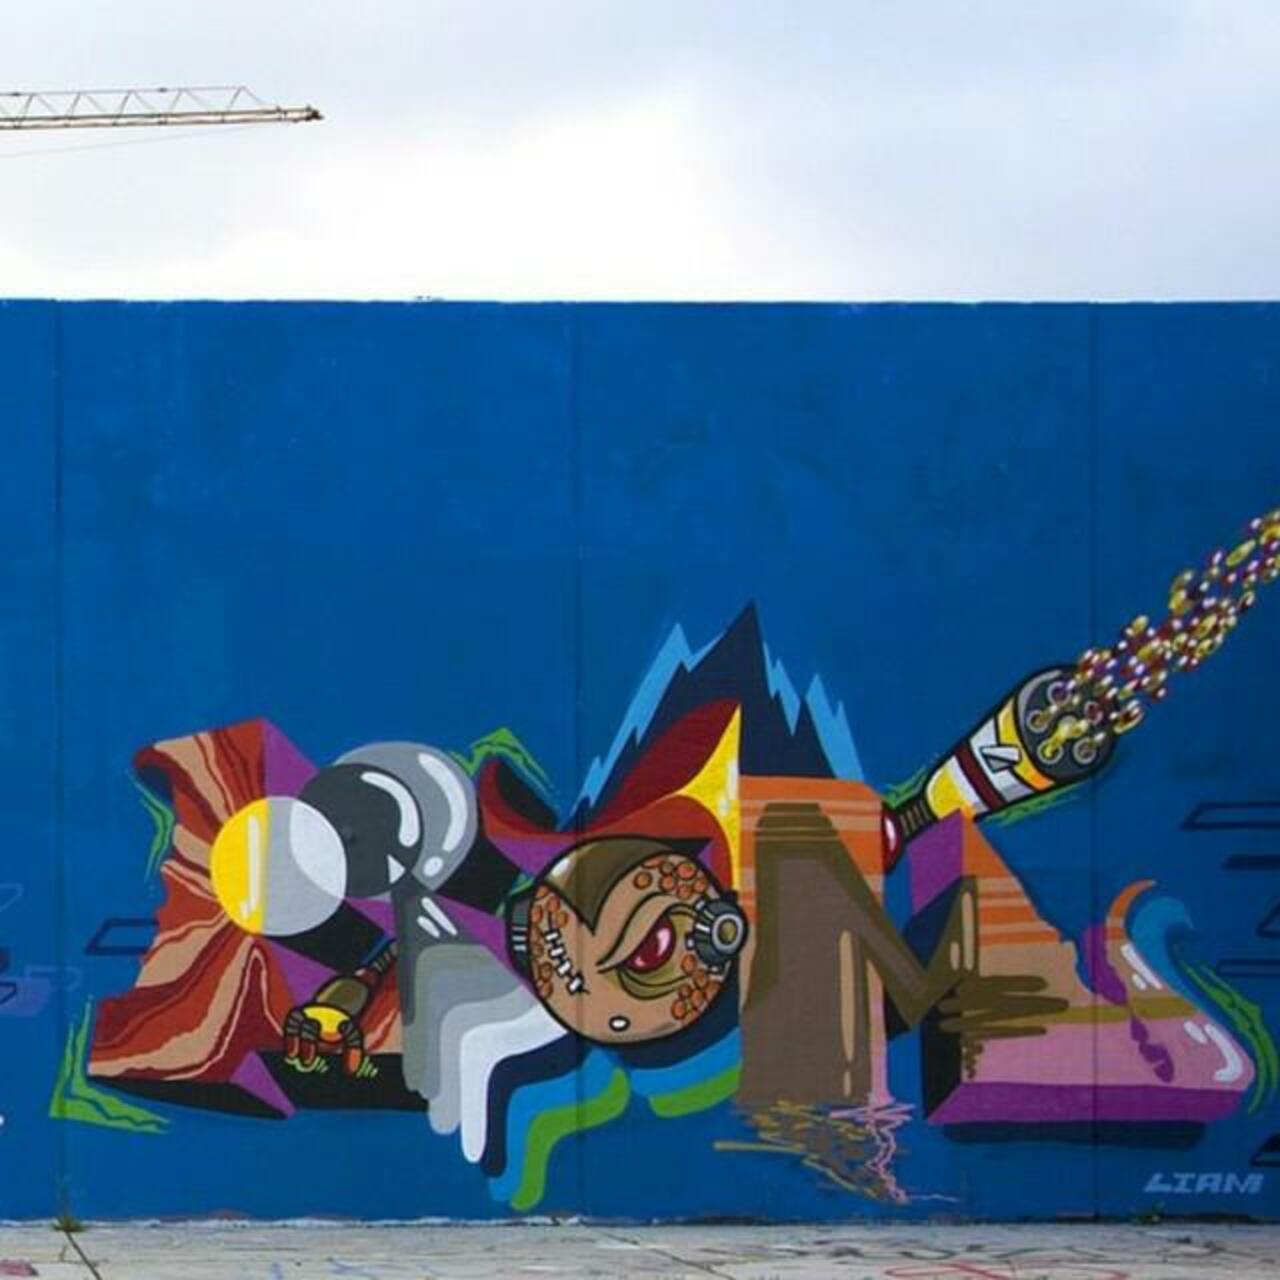 Dope piece by @tranliam 
#graff #graffiti #bombingscience #graffitisupply #graffitisupplies #art #graffporn #graffi… http://t.co/enjDVU9pzS